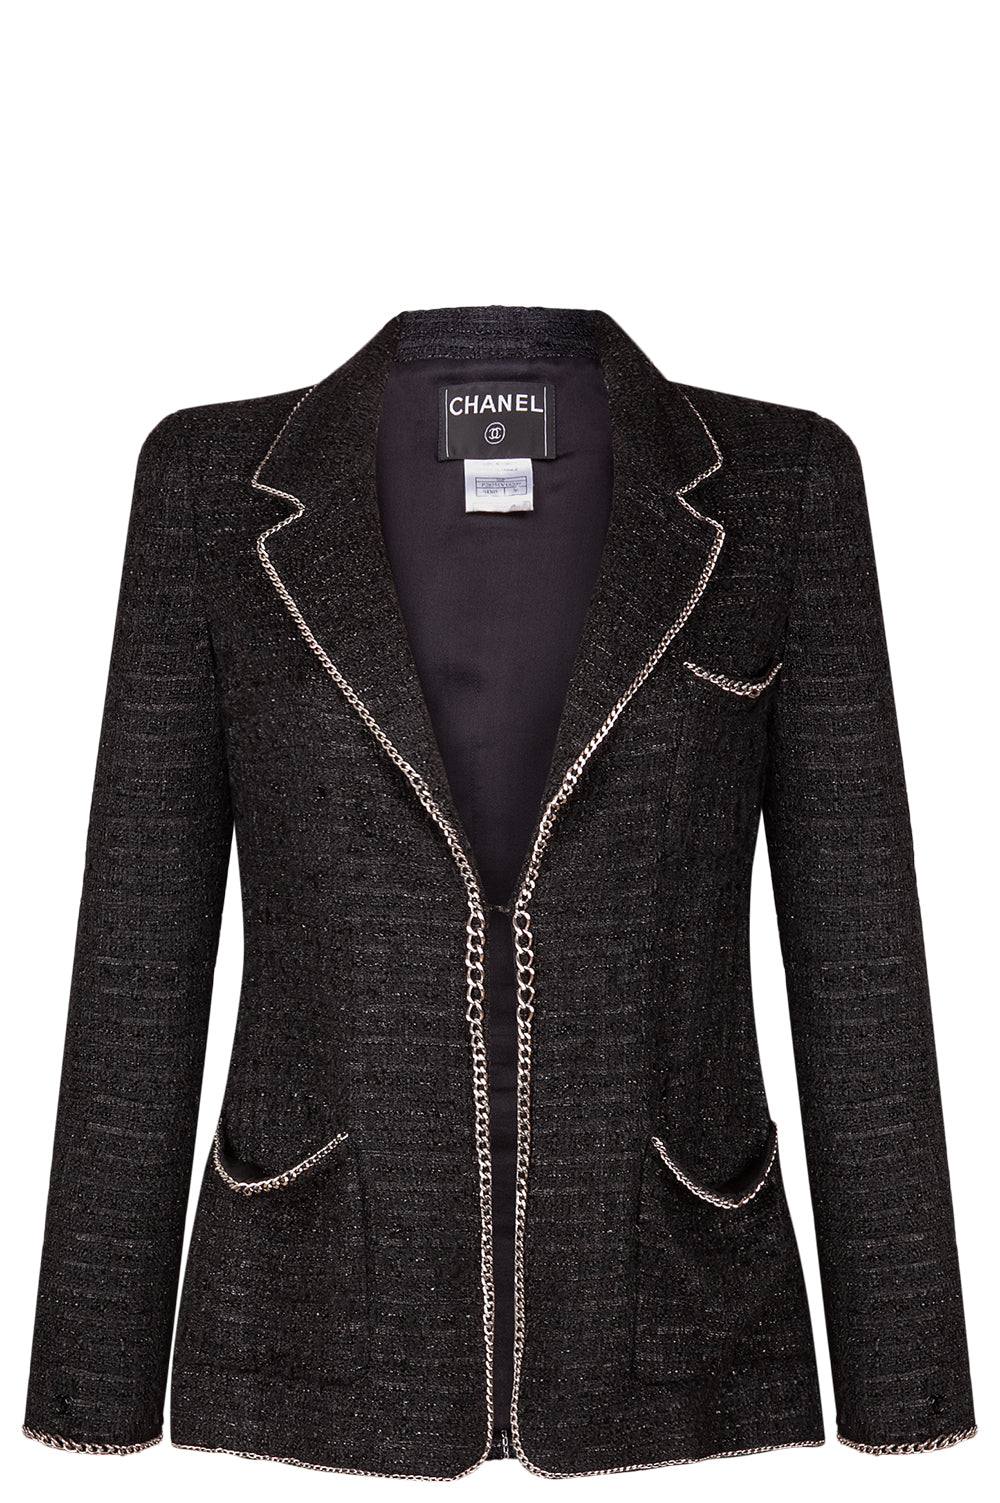 Chanel Tweed Jacket Black 